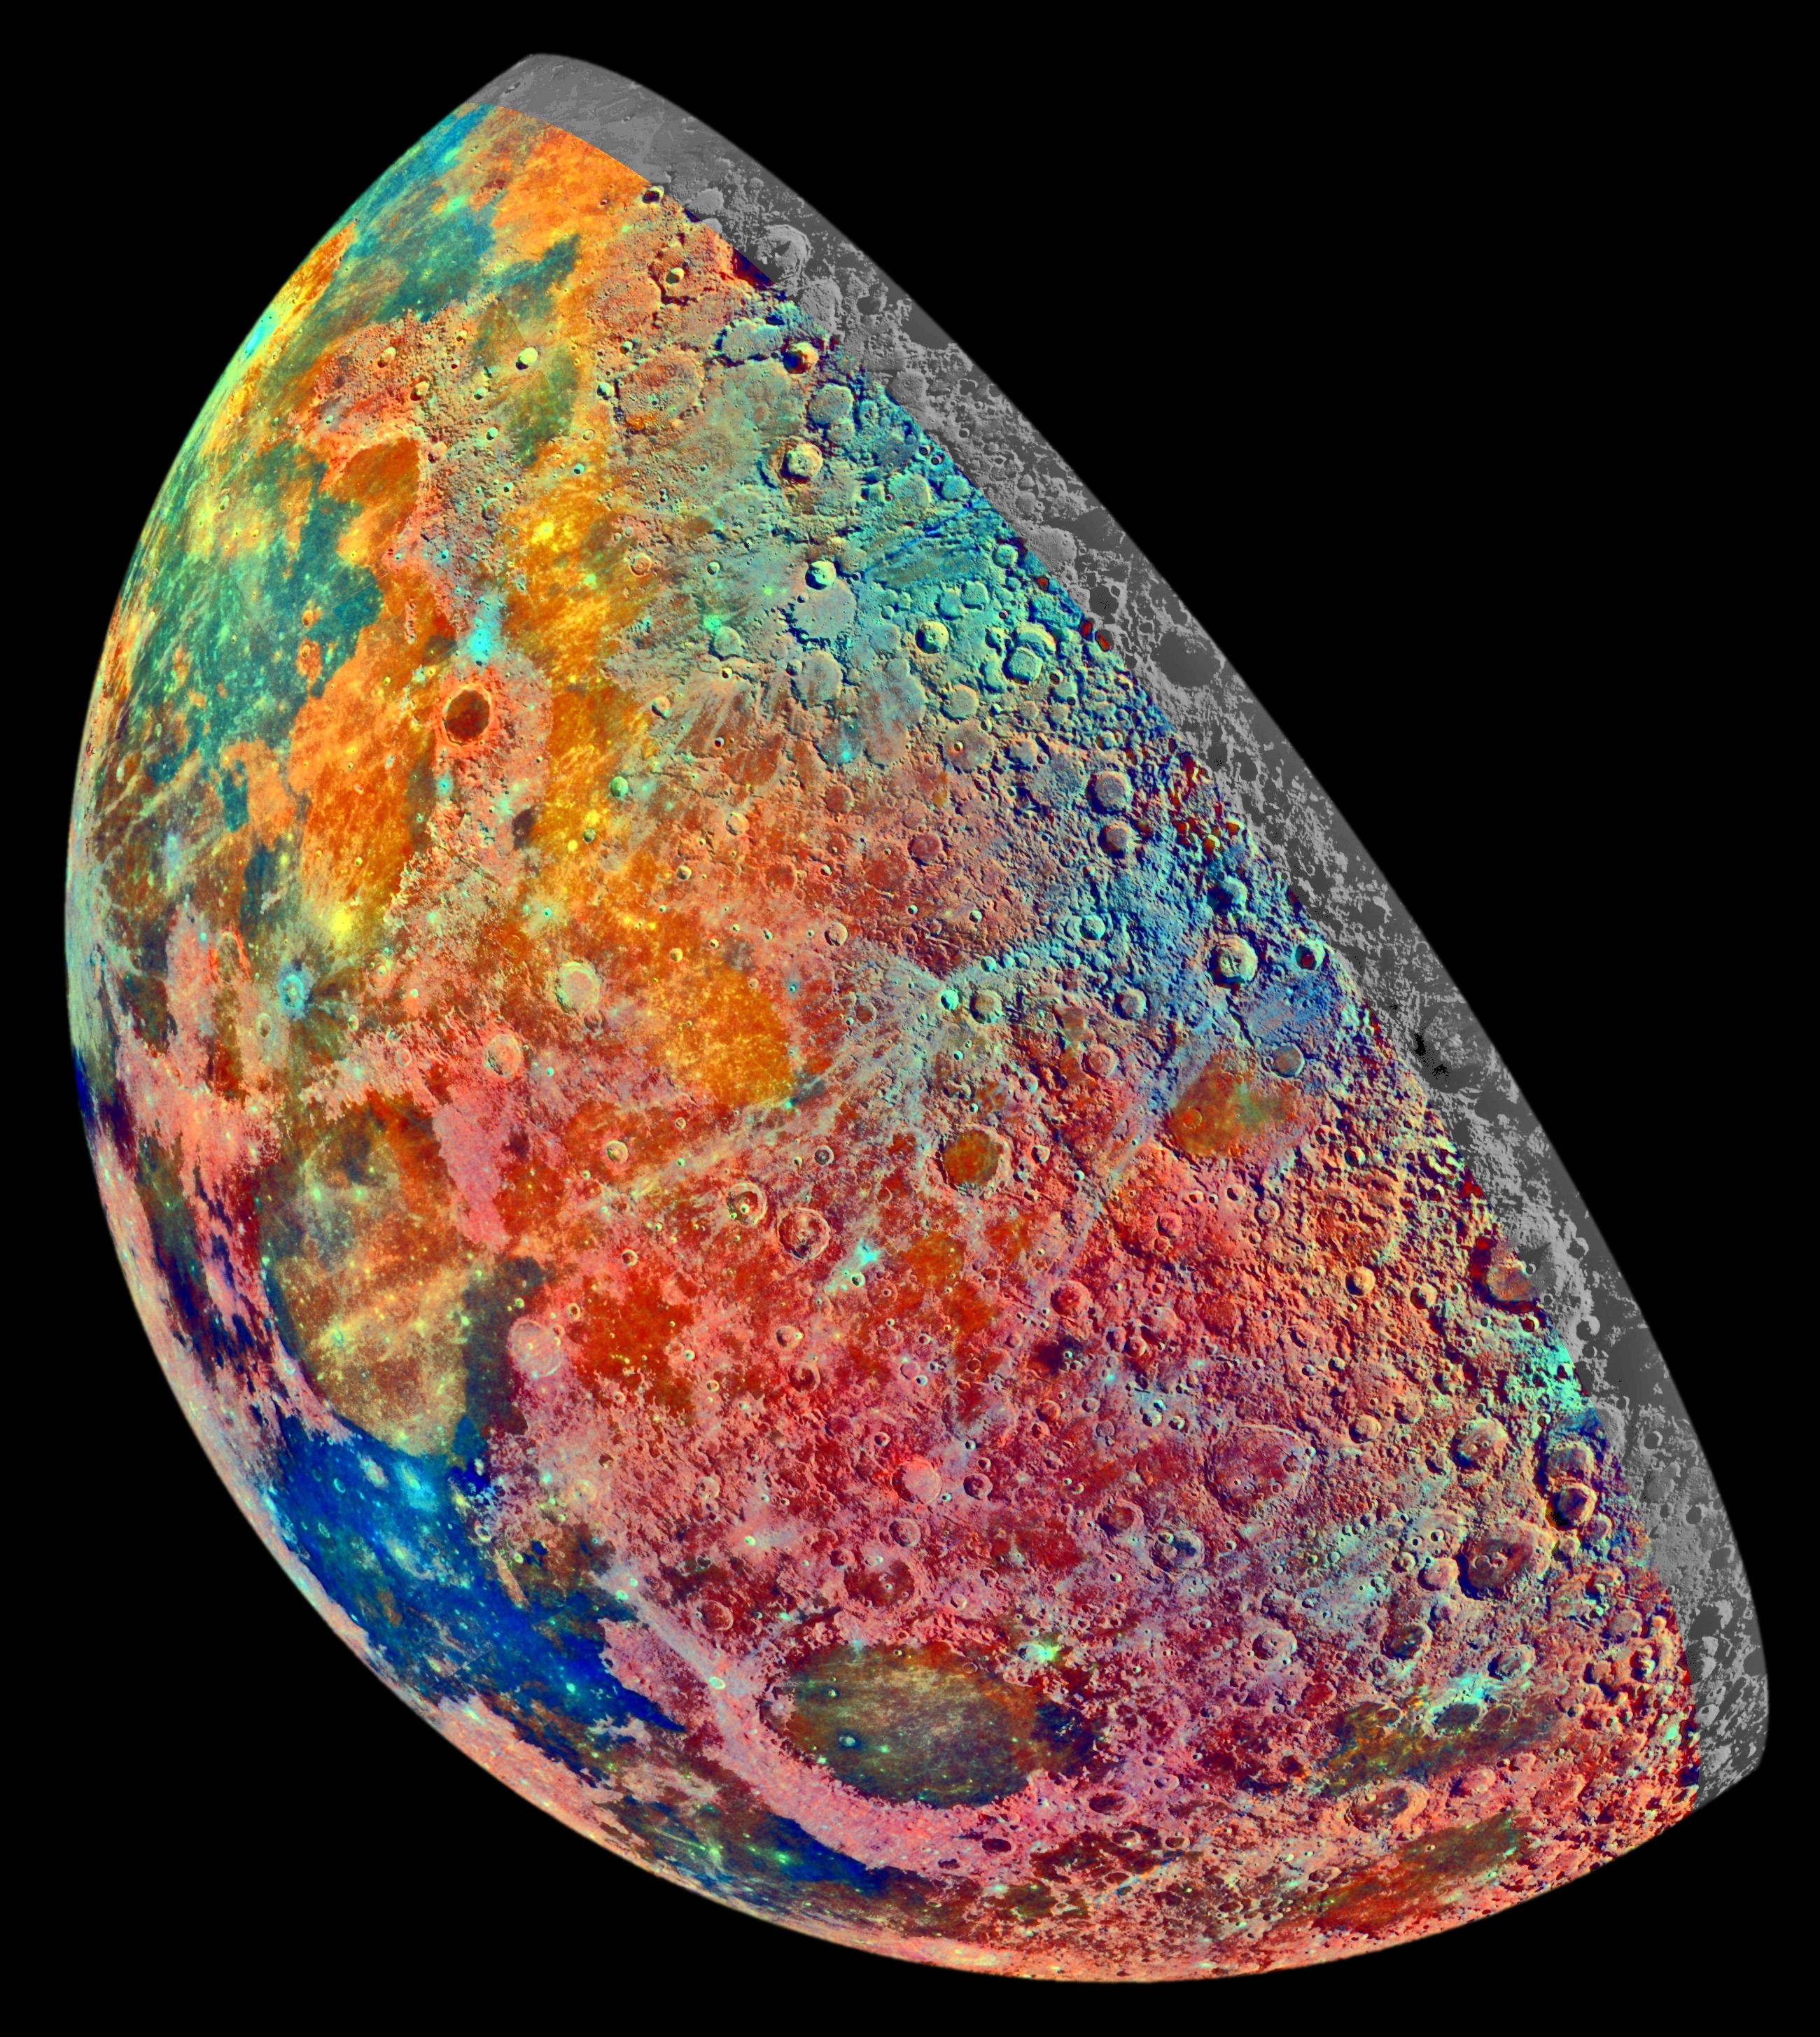 Moon - Wikipedia